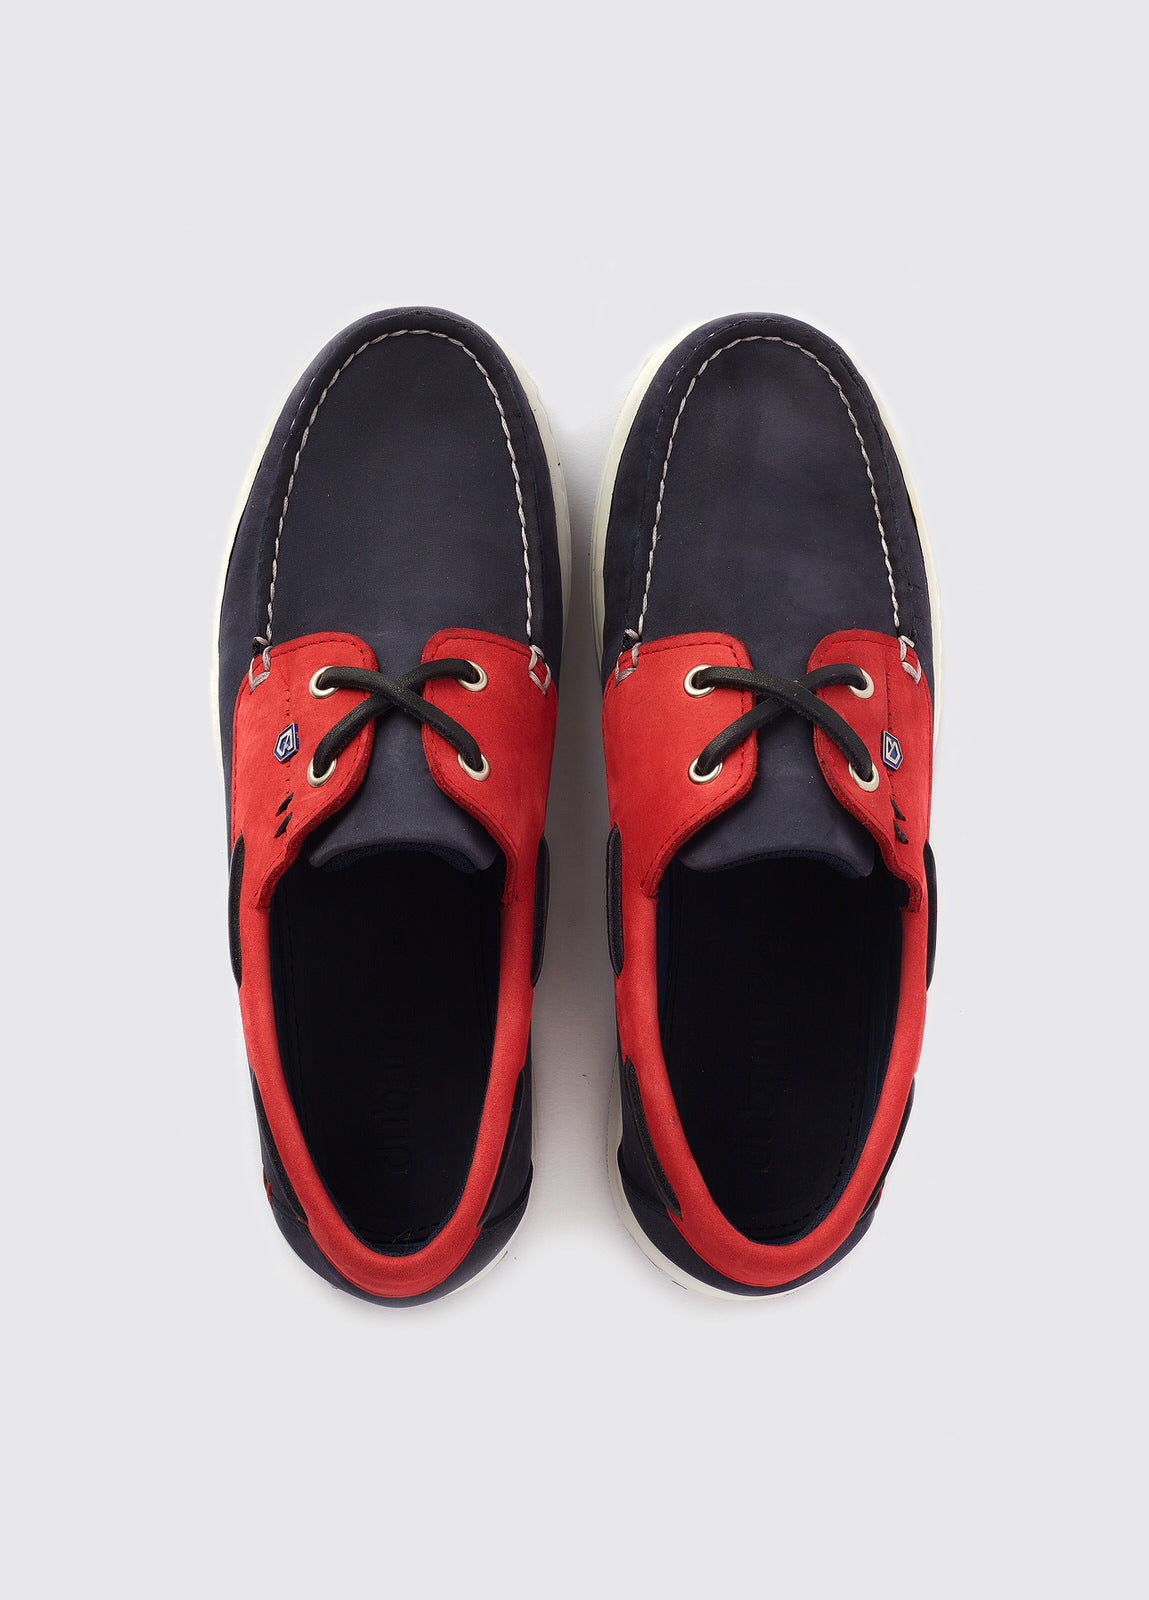 Florida Deck shoes - Denim/Red